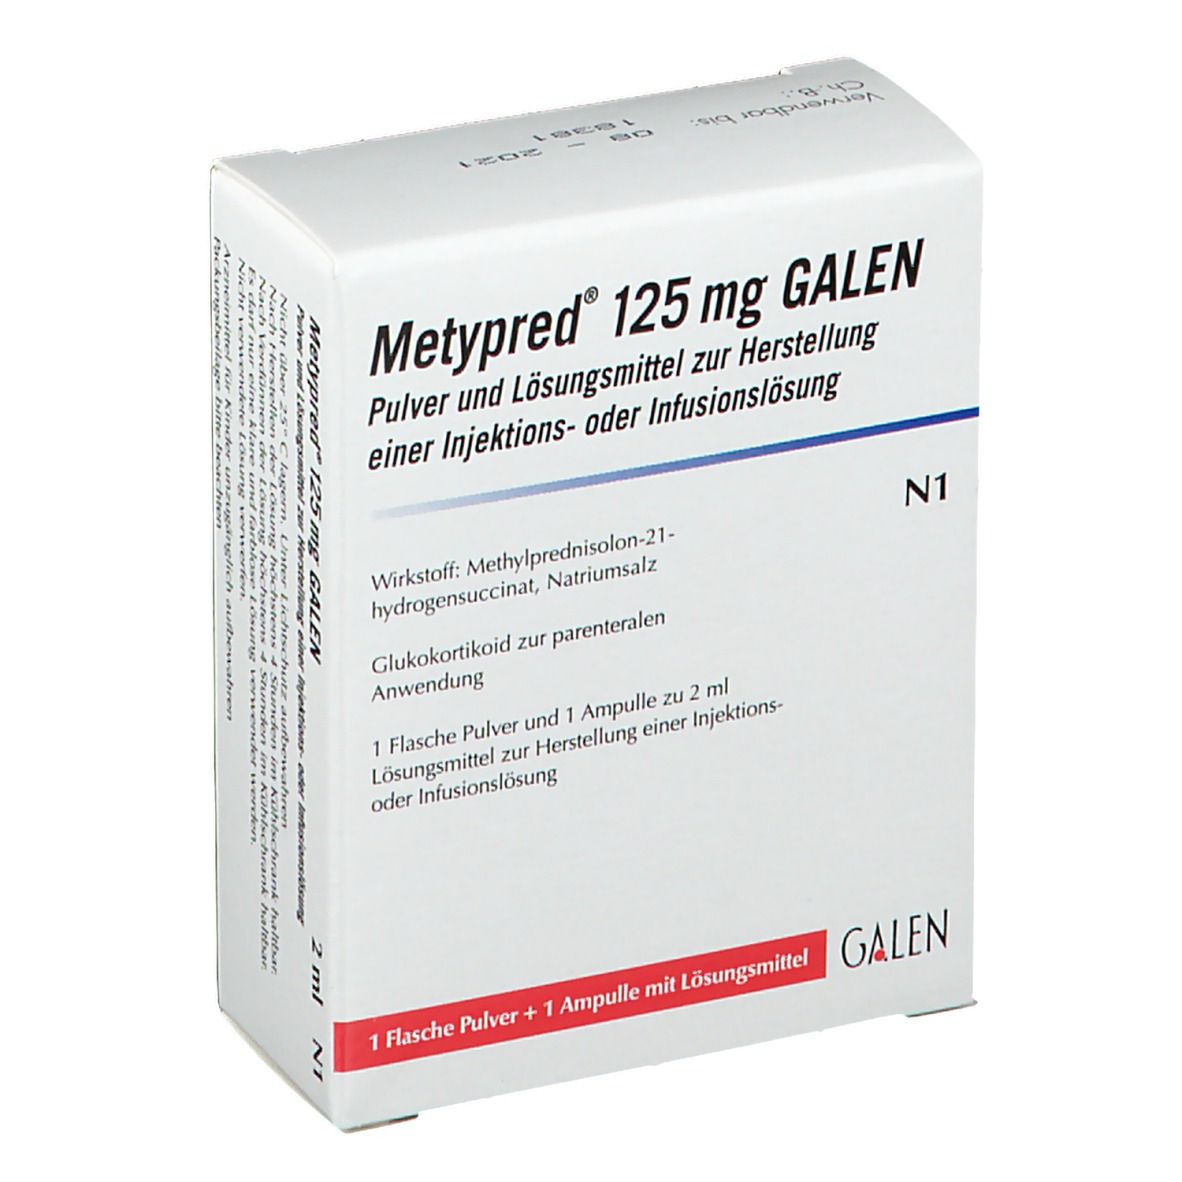 Metypred® 125 mg GALEN